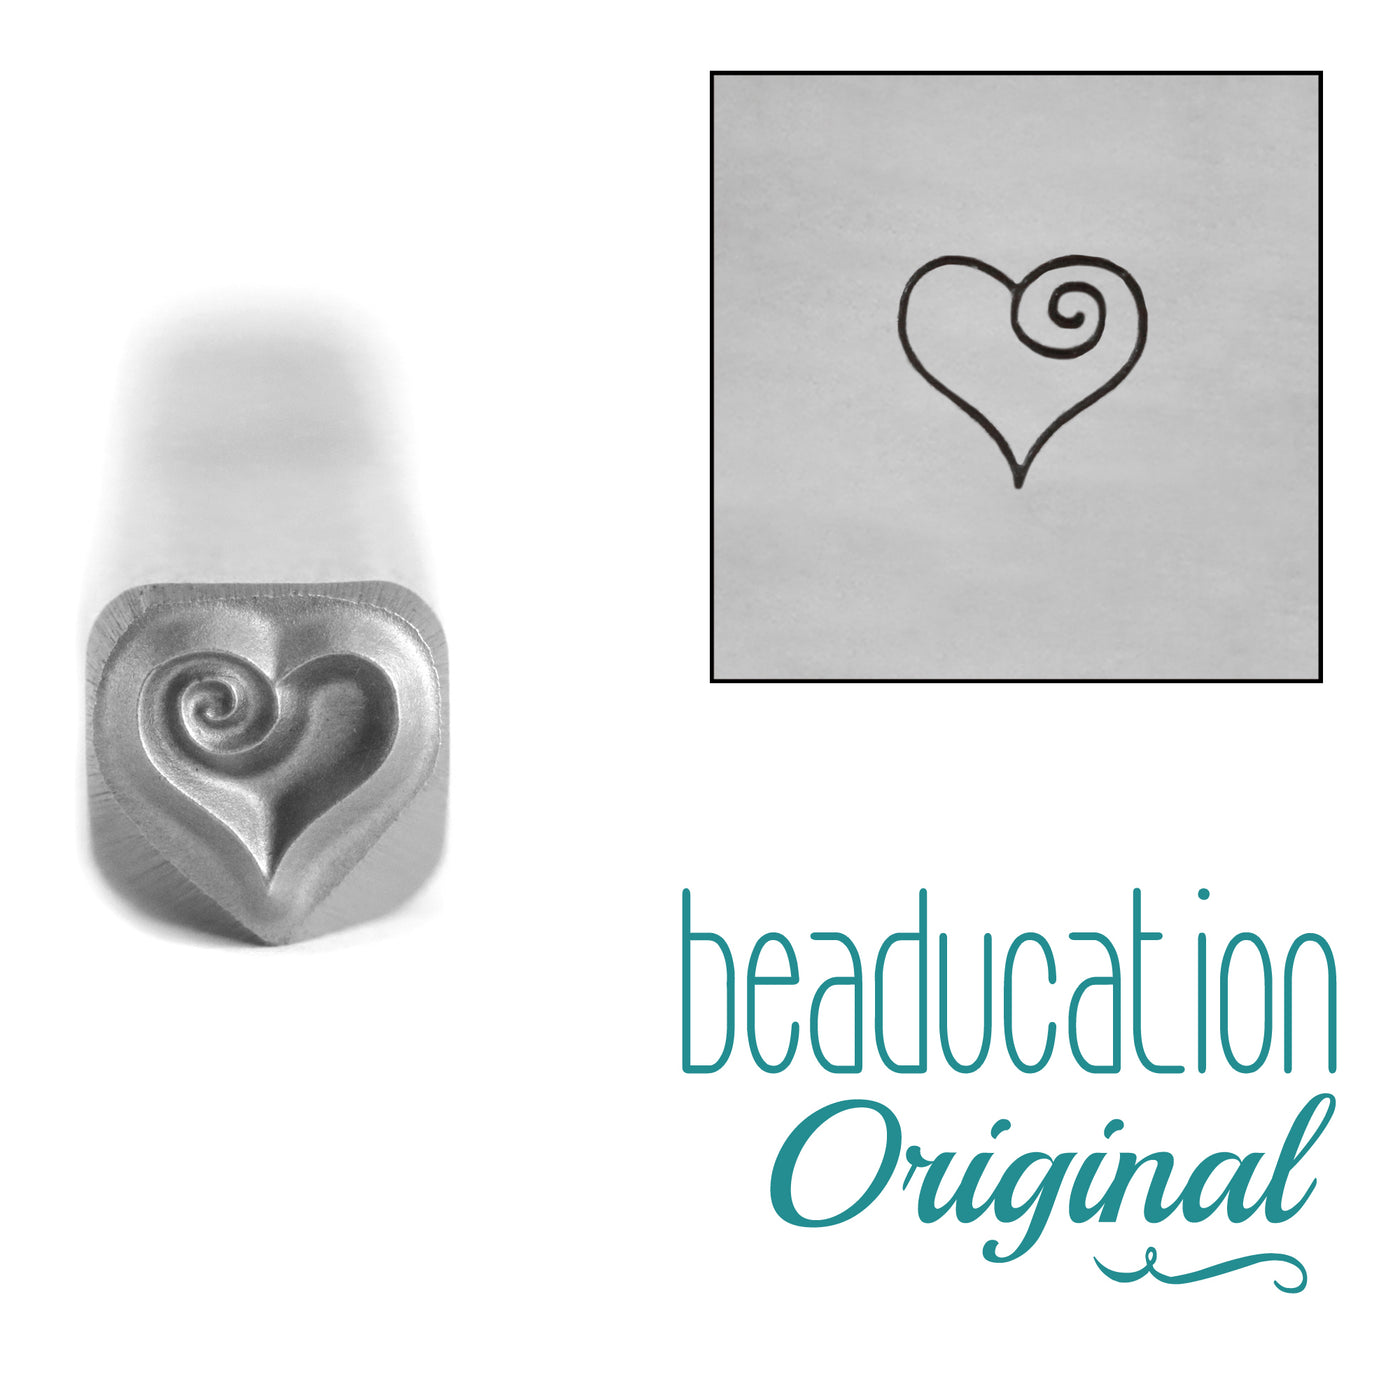 Heart with Spiral Metal Design Stamp, 4.5mm - Beaducation Original